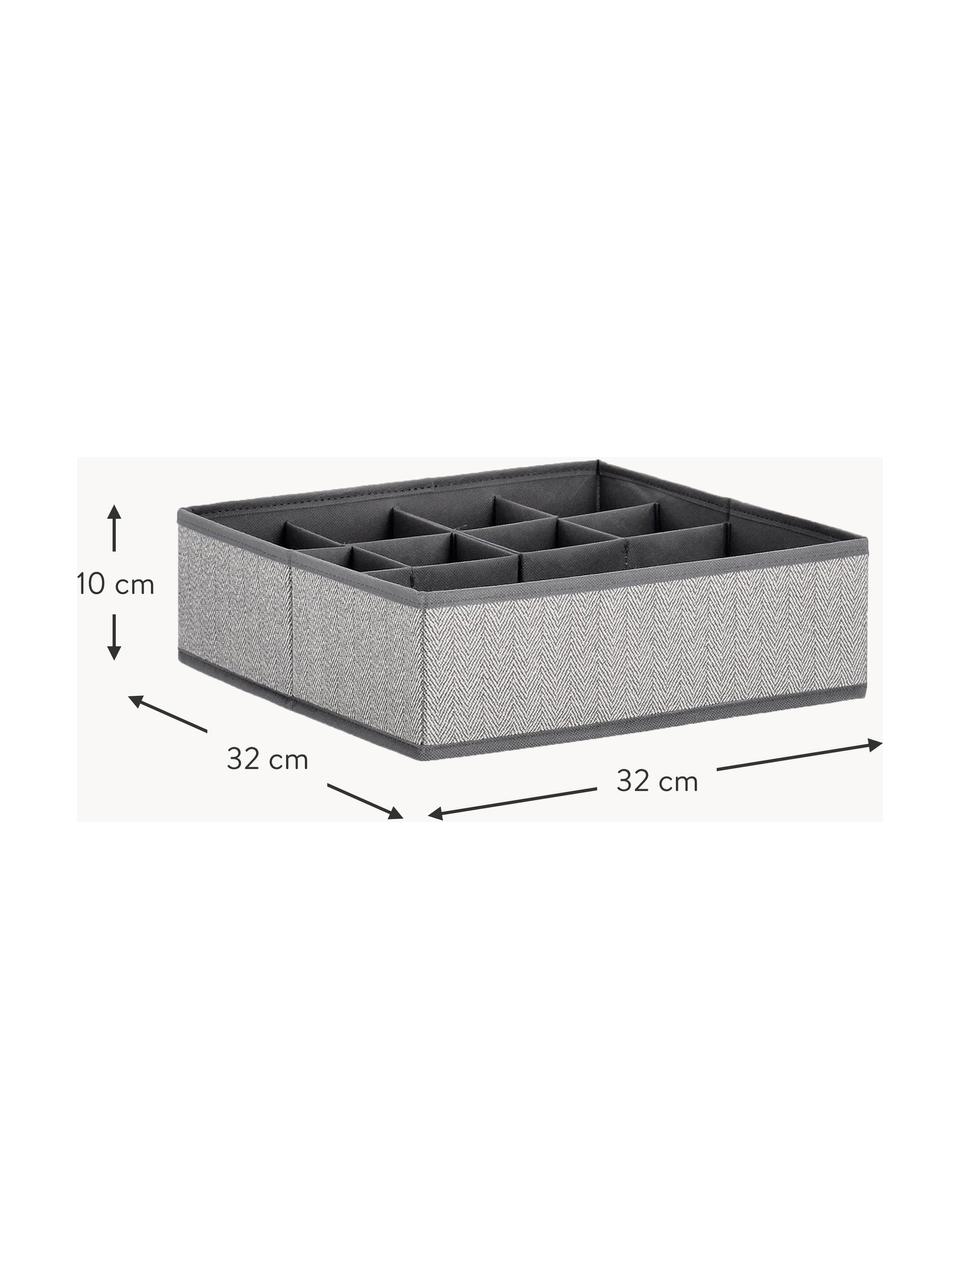 Skladovací box Tidy, T 32 cm, Umělé vlákno, Odstíny šedé, Š 32 cm, H 32 cm